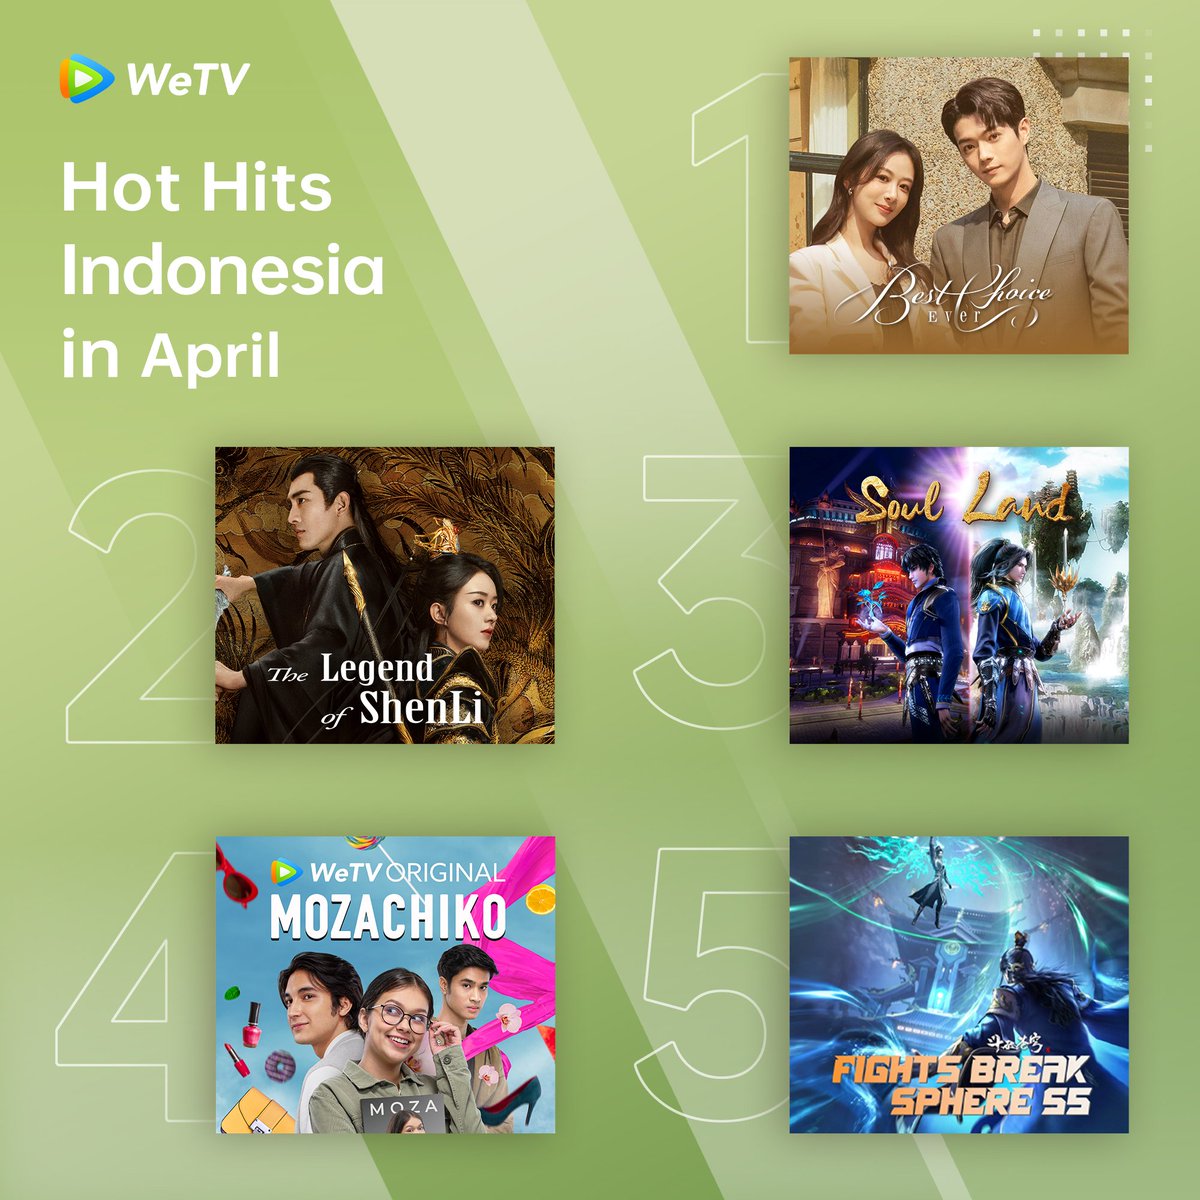 #WeTV Indonesia Hot Hits in April🔥

#BestChoiceEver #承欢记
#TheLegendofShenLi #与凤行
#SoulLand #斗罗大陆
#WeTVOriginal #Mozachiko
#FightsBreakSphereS5 #斗破苍穹年番

#WeTVRanking
#WeTVAlwaysMore